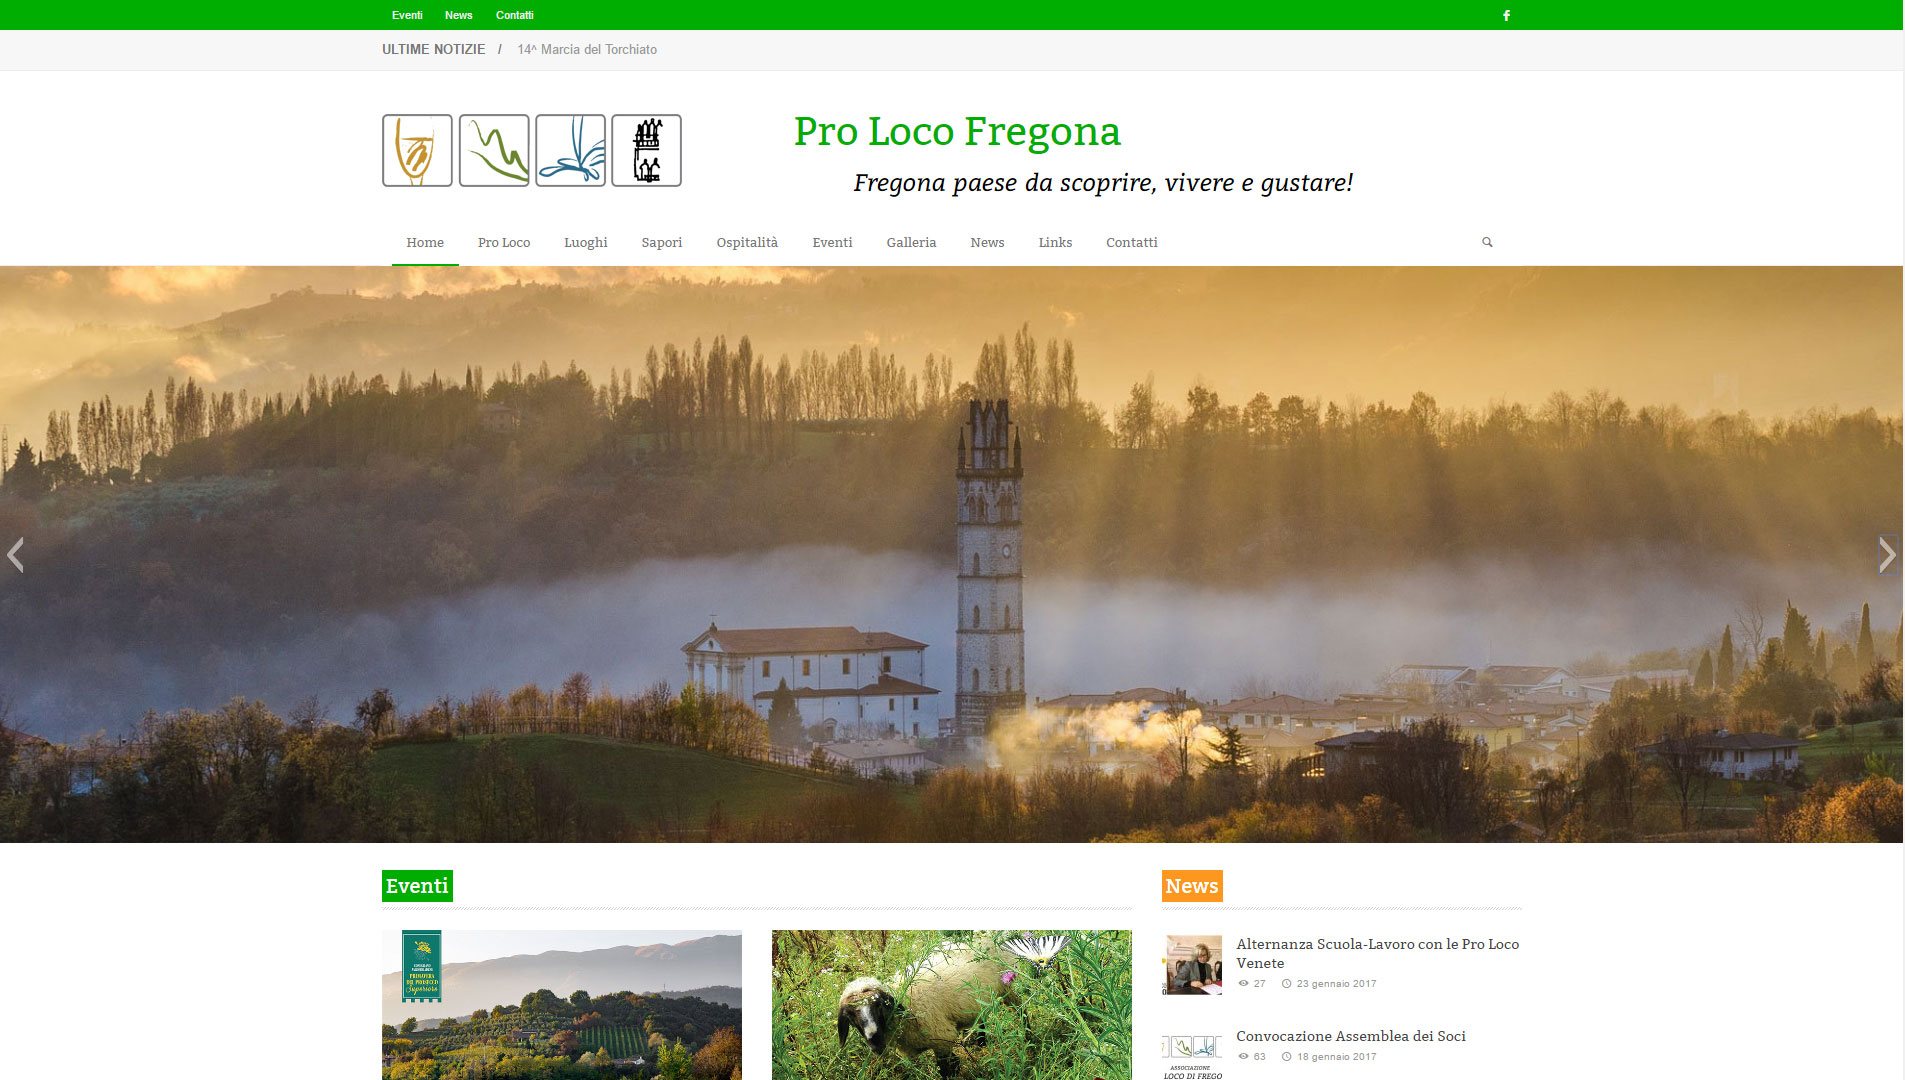 Pro Loco Fregona | Christian De Luca - Web Designer & Developer